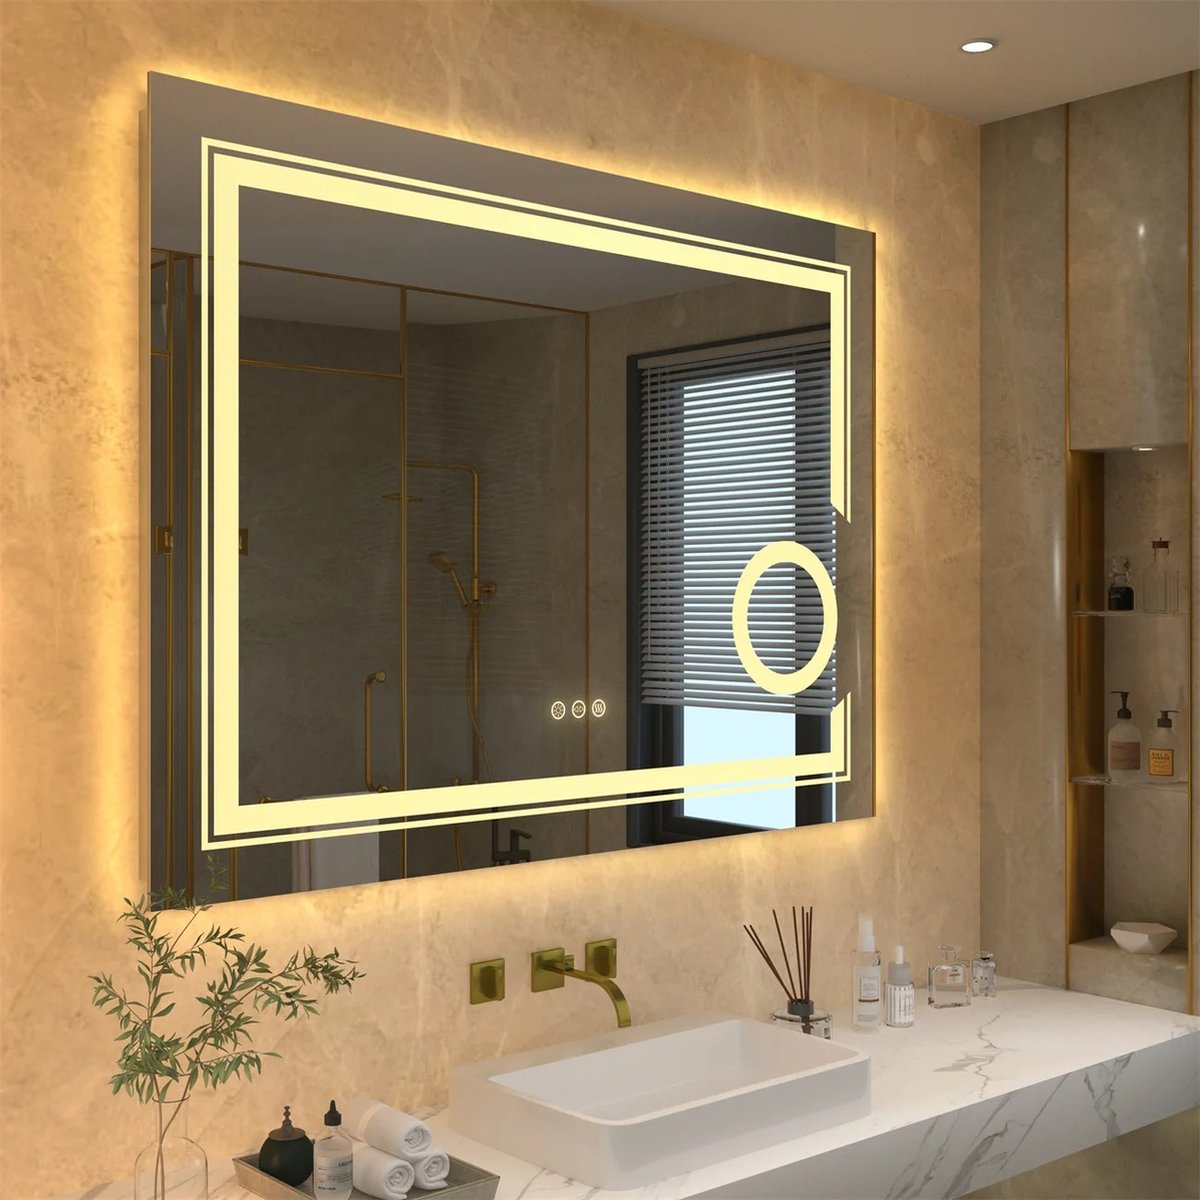 Nueva Vida - Badkamer Spiegel Met Verlichting - Vergrootglas - LED - 70 cm x 90 cm - Voor en Achtergrond Verlichting - Anti Fog Systeem - HD Glas